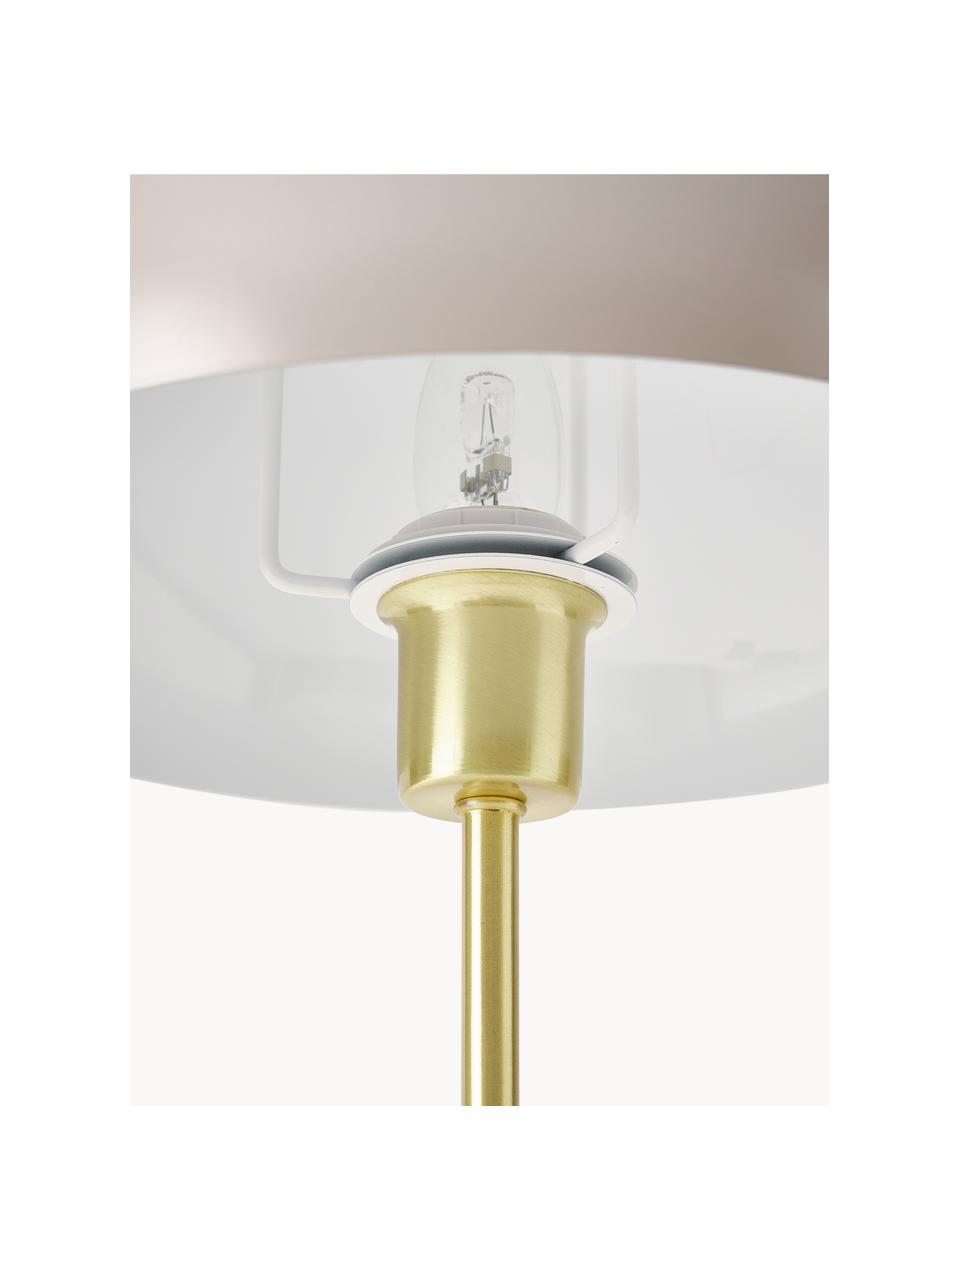 Tafellamp Matilda, Lampenkap: gepoedercoat metaal, Lampvoet: vermessingd metaal, Beige, goudkleurig, Ø 29 x H 45 cm